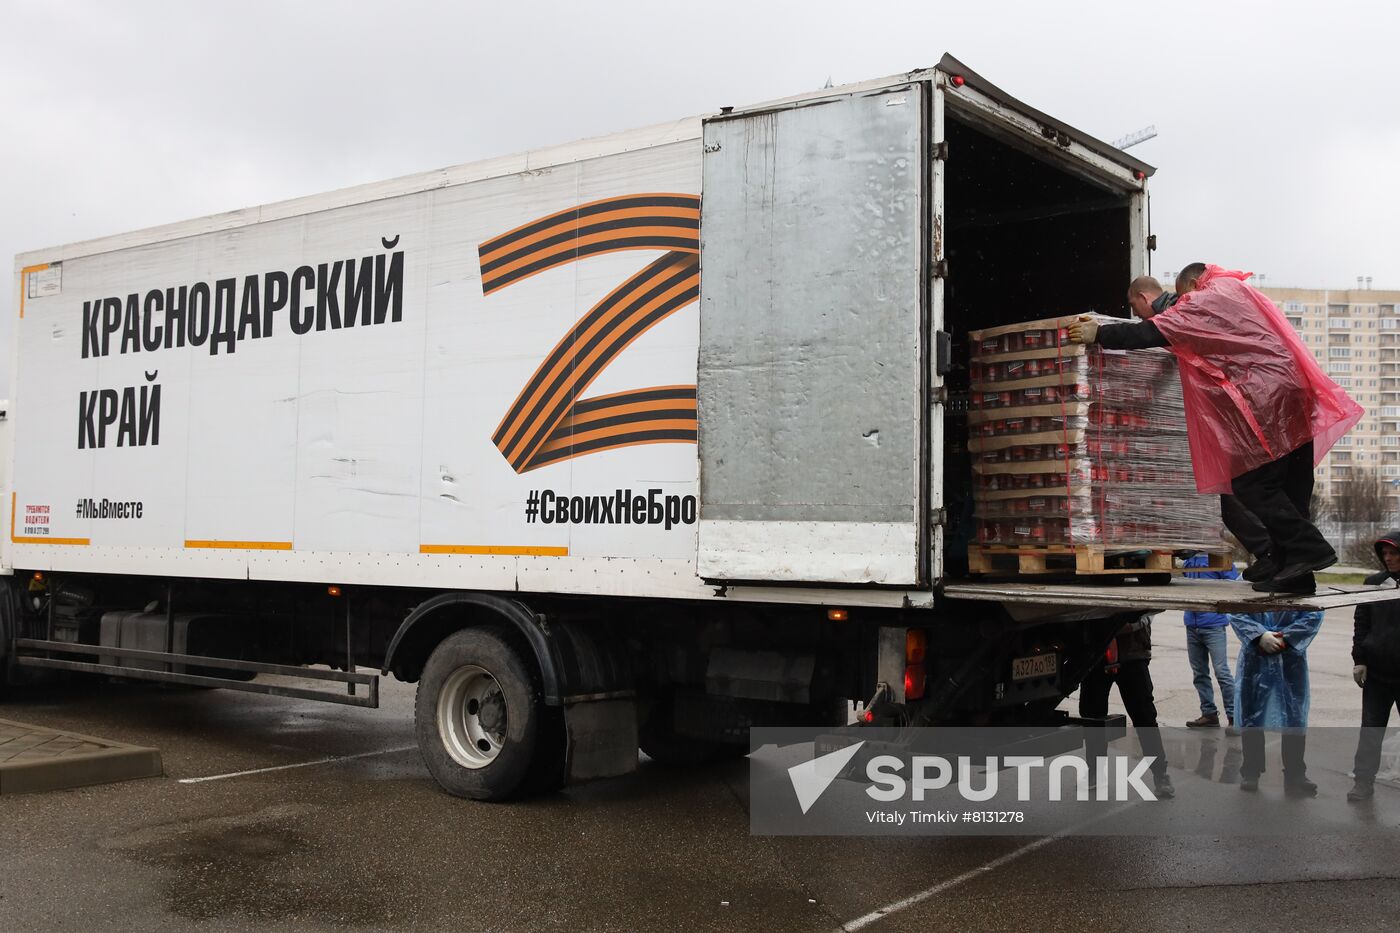 Russia Ukraine Humanitarian Aid